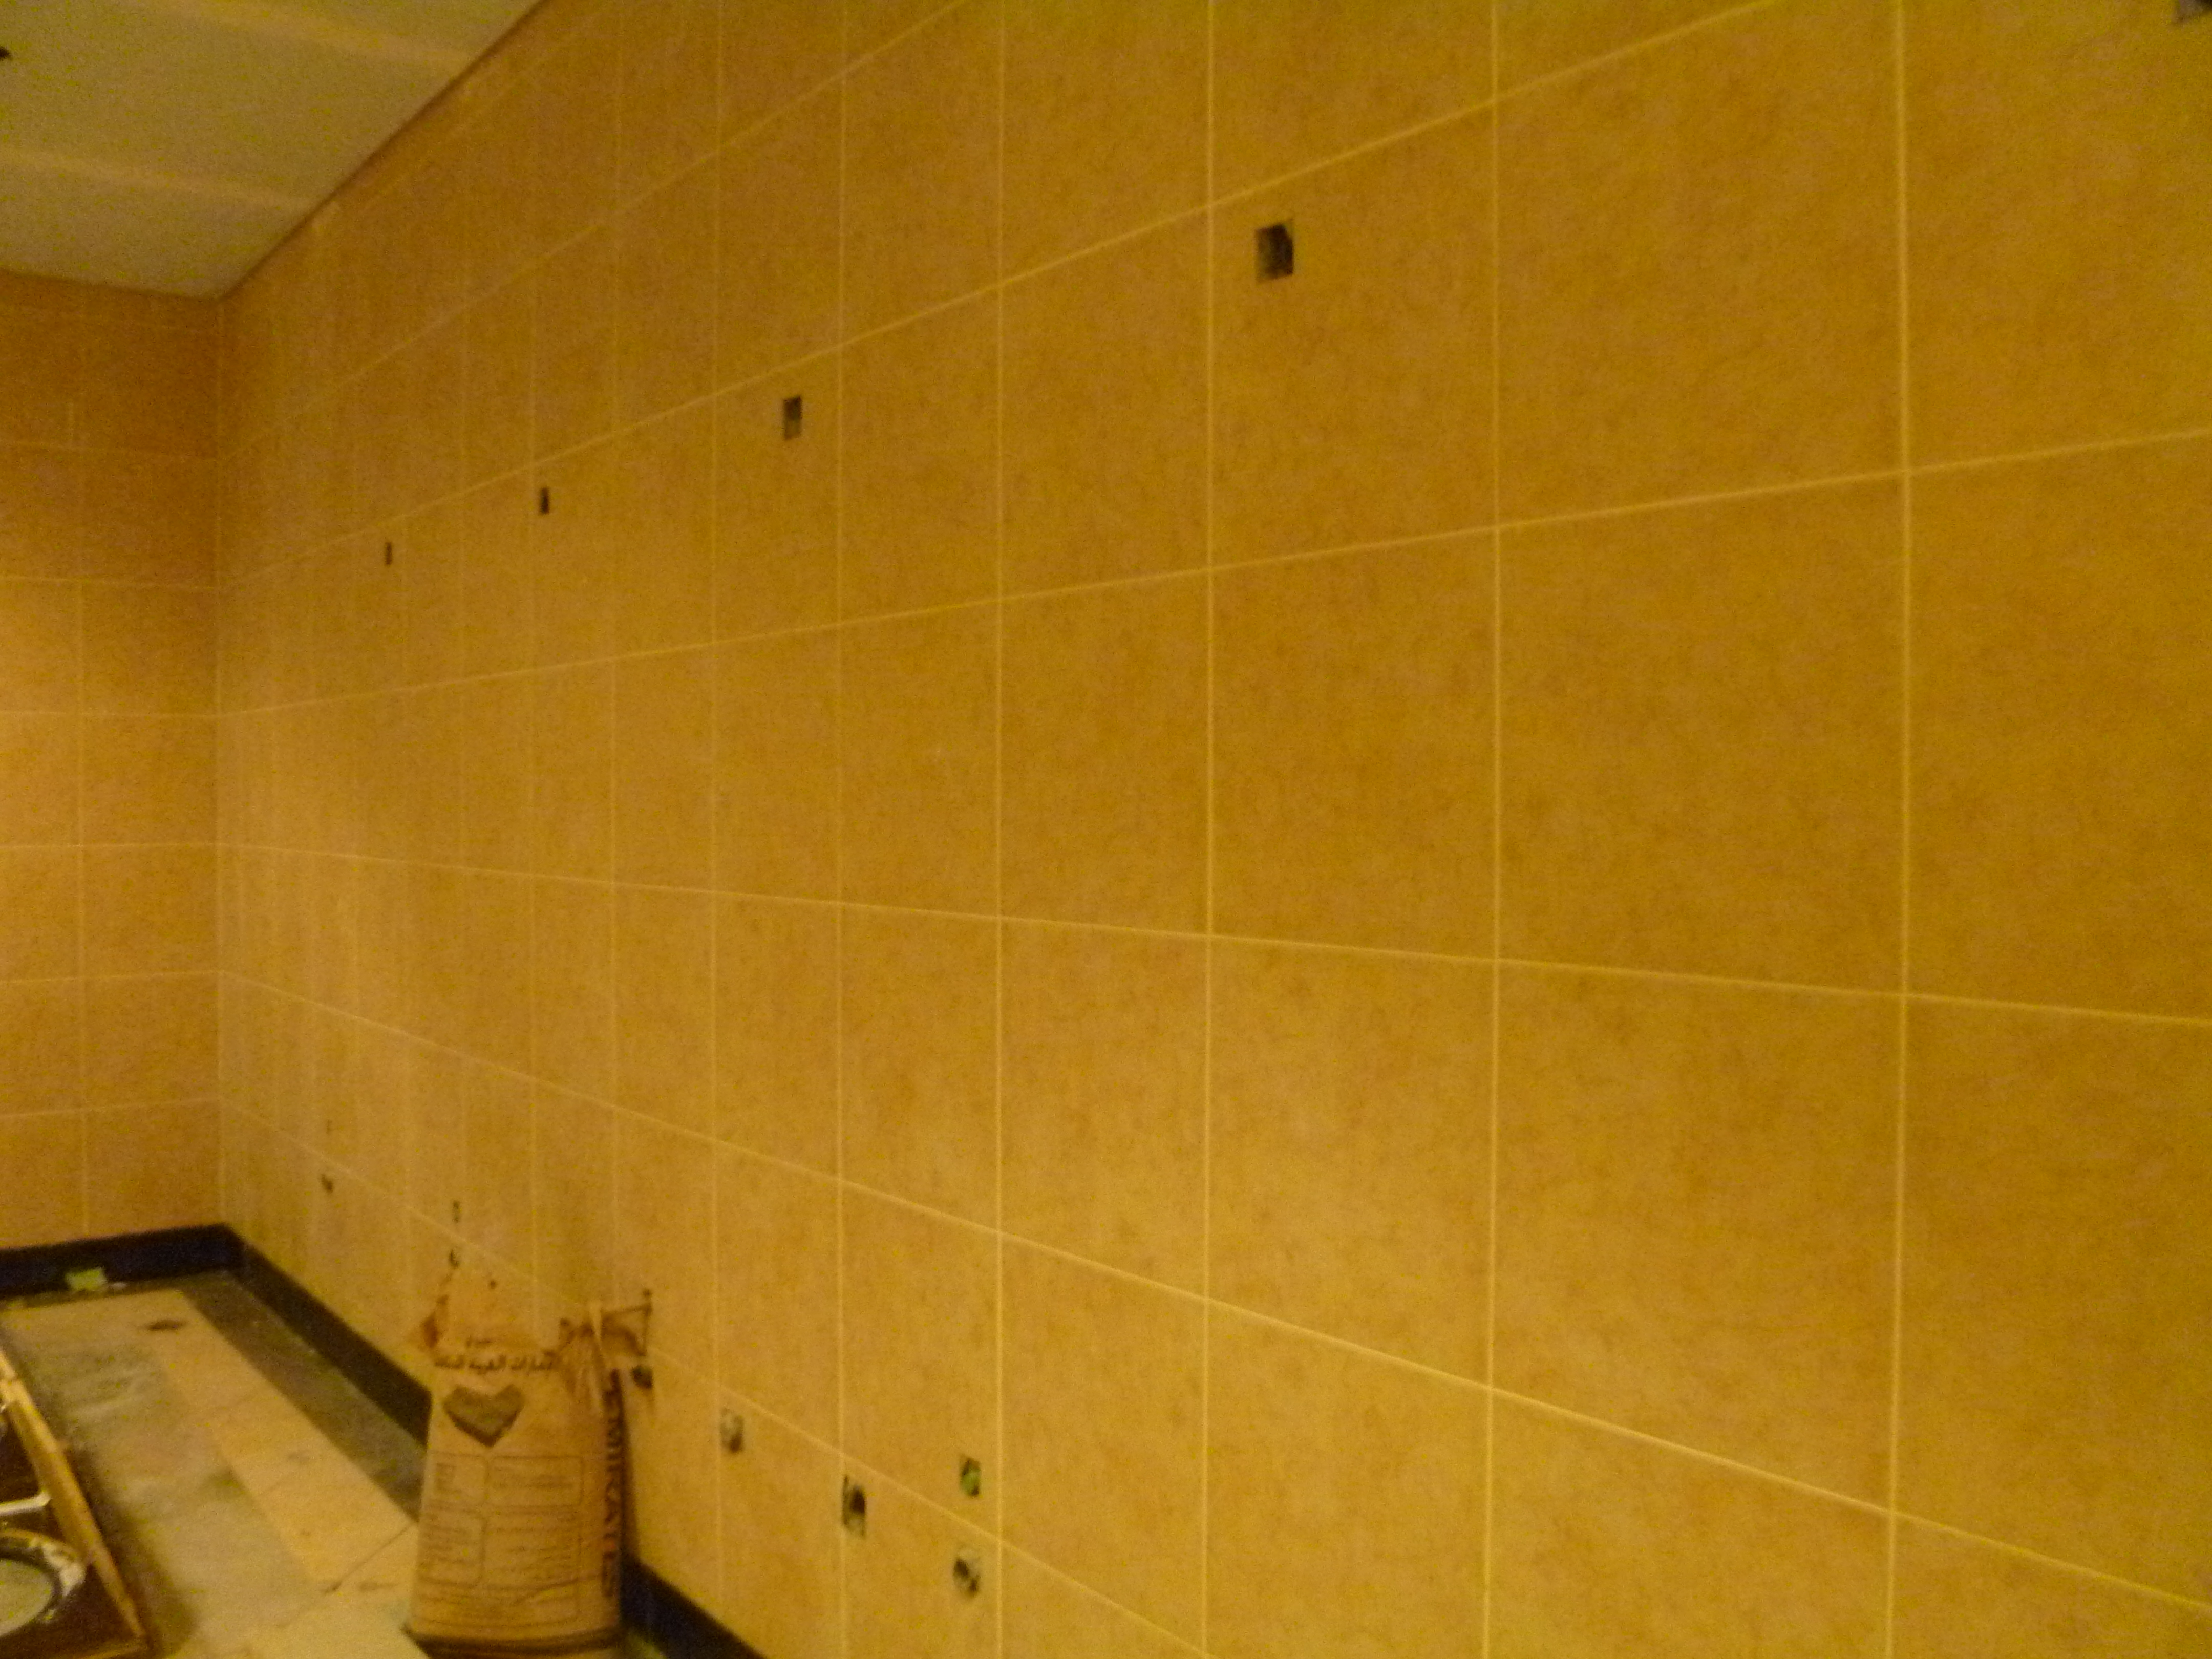 Wall Tiling @ Deira City Centre Washroom (1)